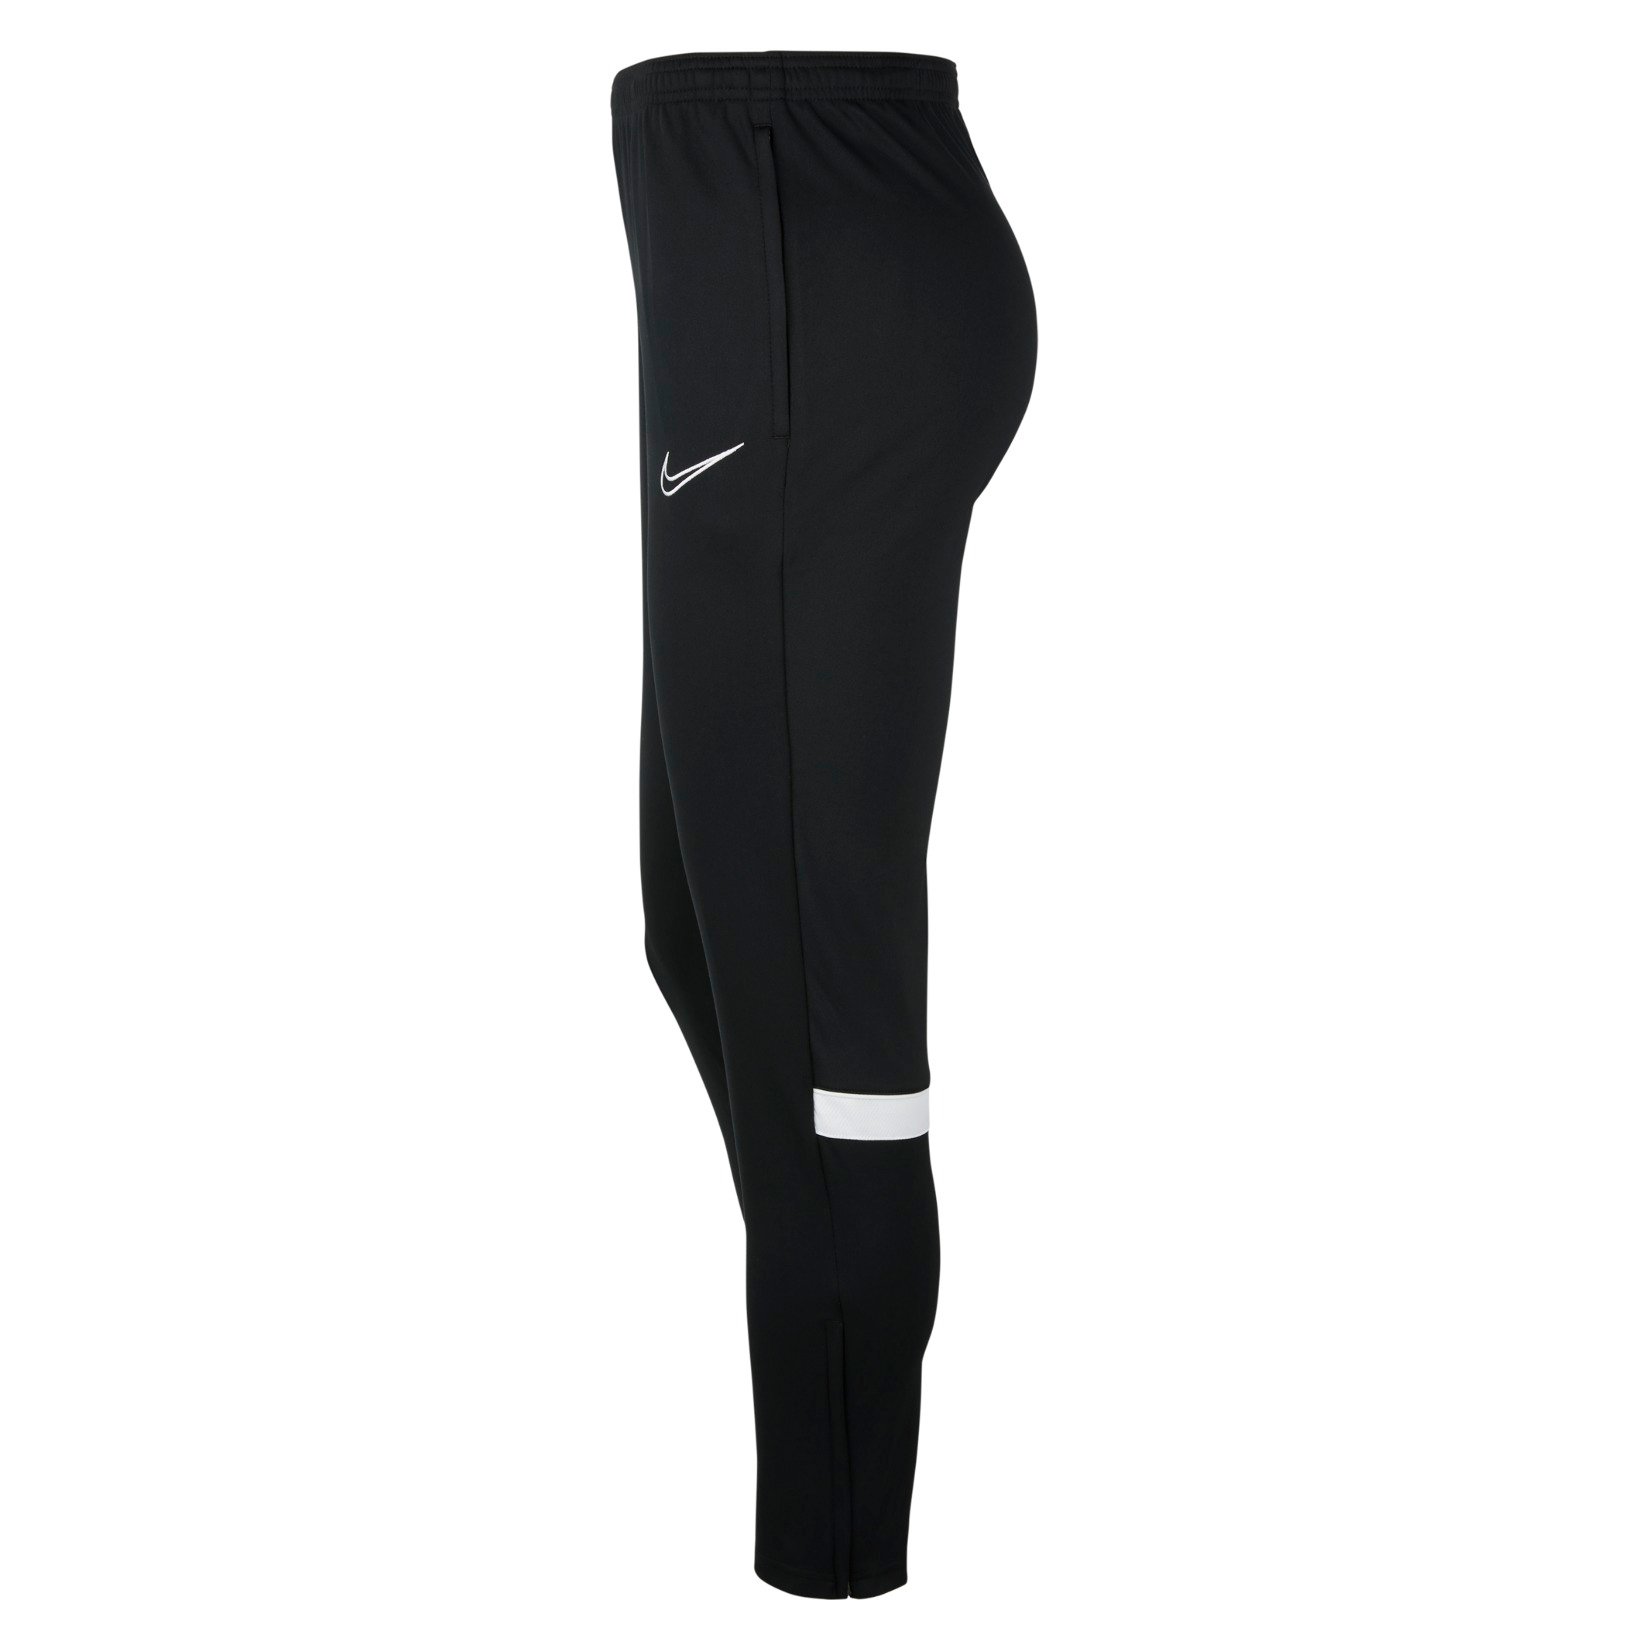 Nike Academy 21 Tech Knit Pants: Initials - Kitlocker.com